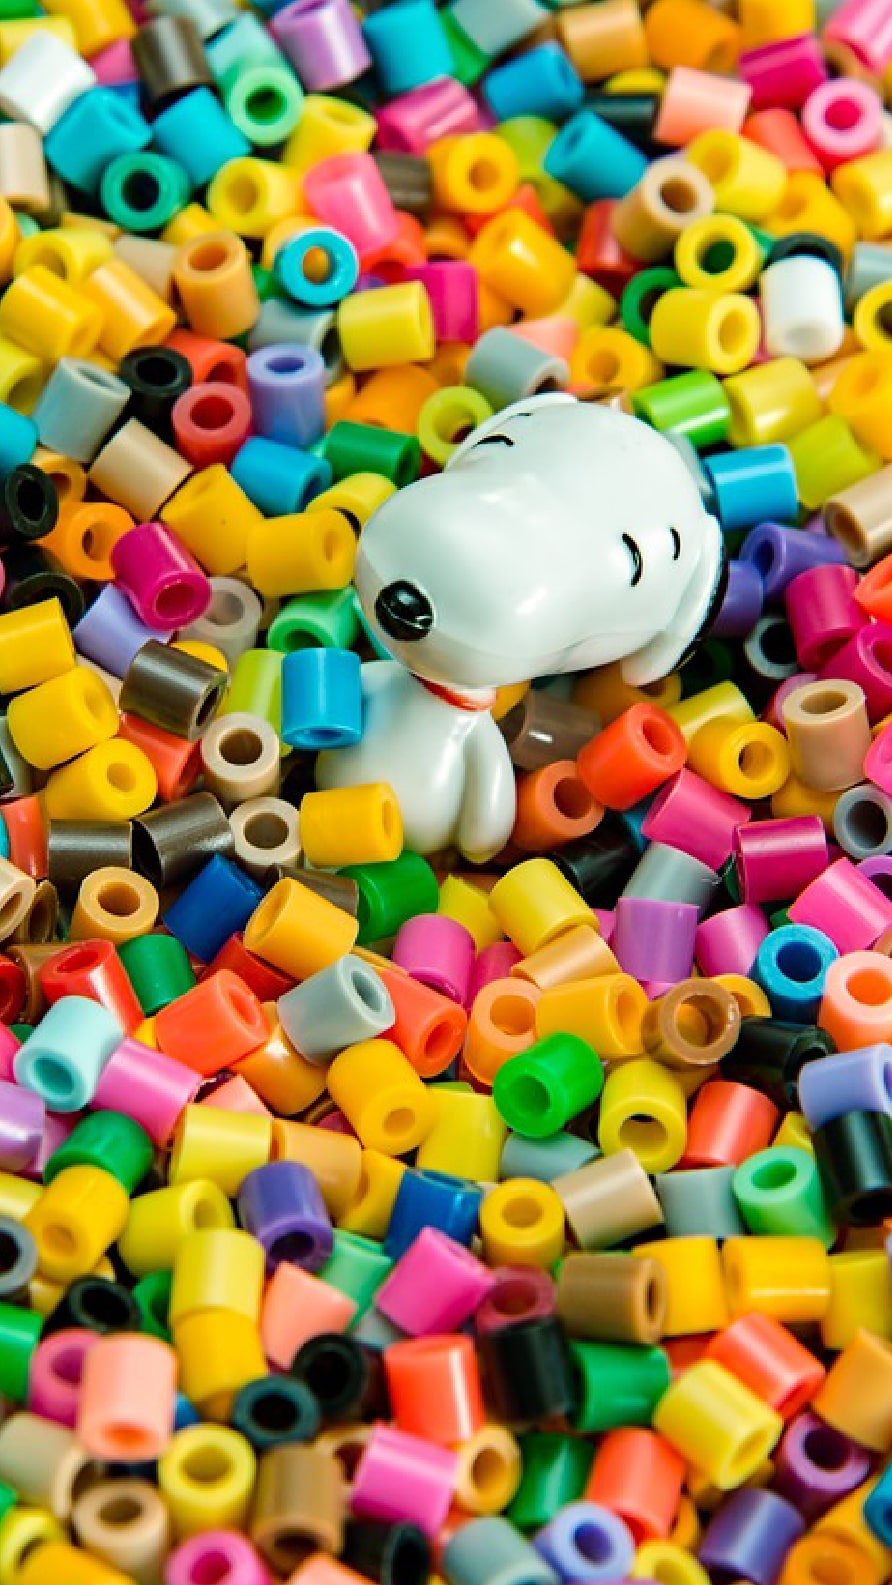 Fonds d'écran iPhone de Snoopy